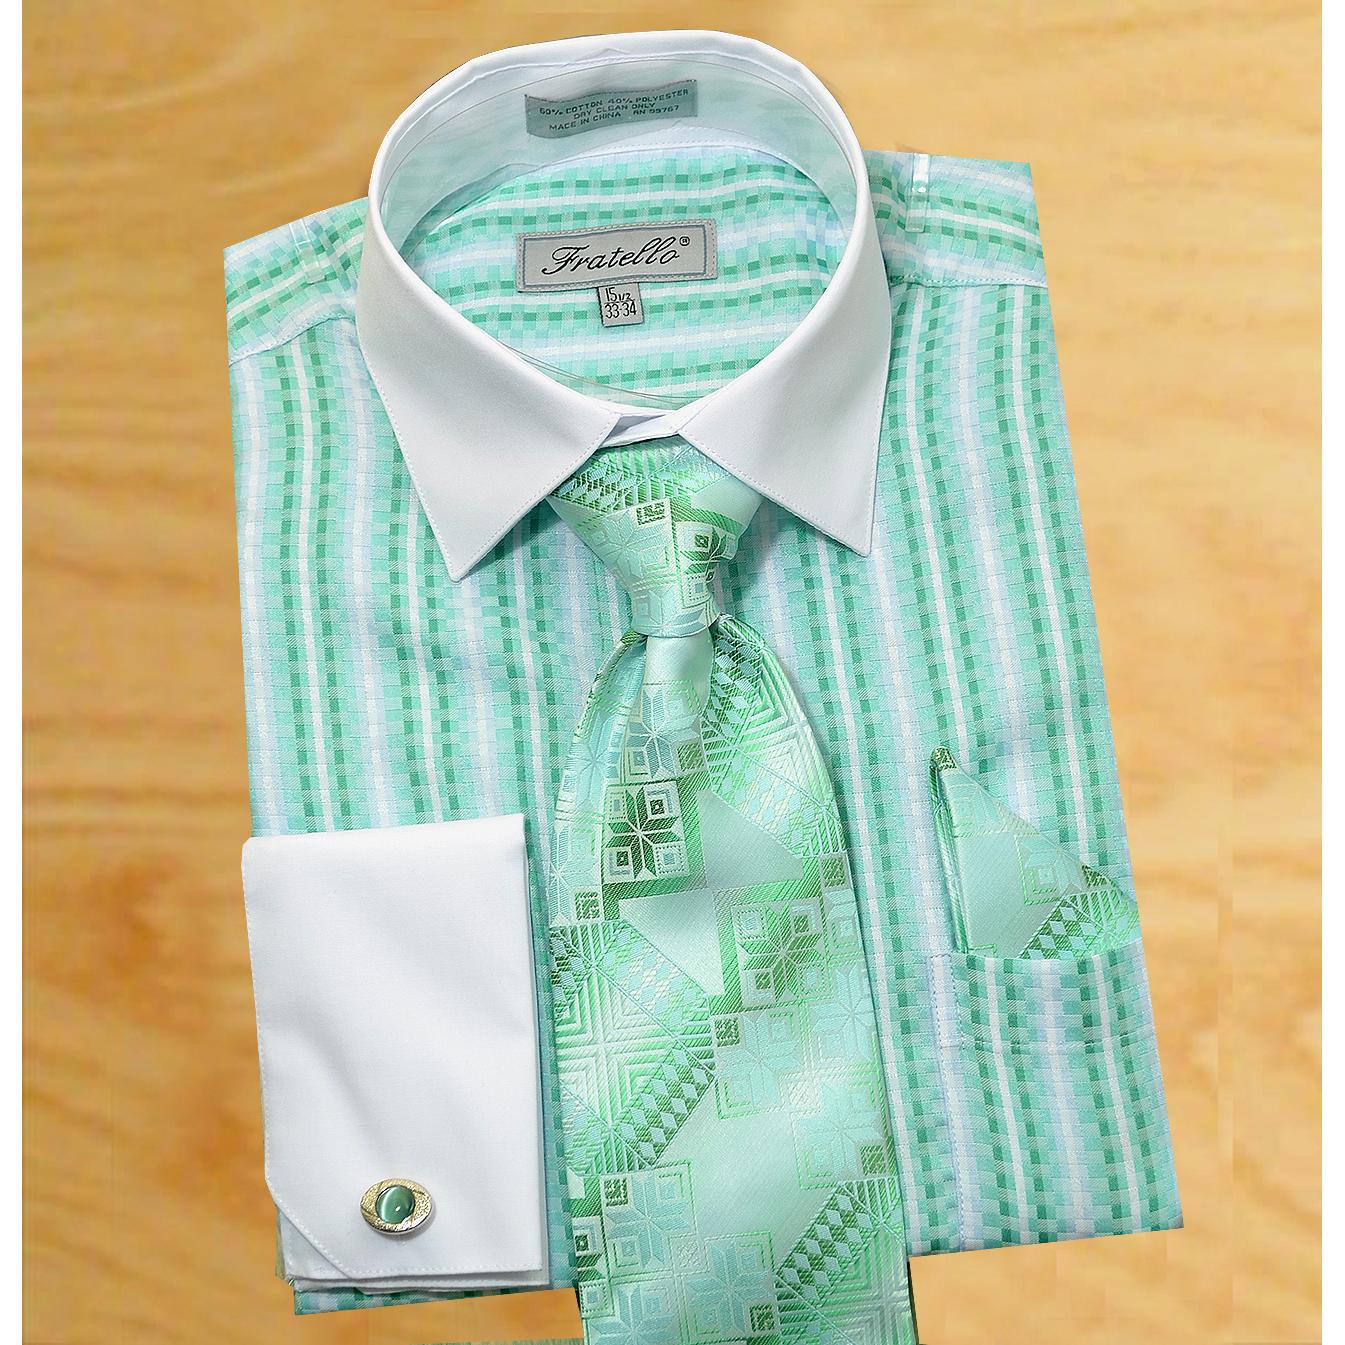 Fratello Mint Emerald Green White Mini Checker Pattern Shirt Tie Hanky Set With Free Cufflinks Frv4130p2 79 93 Upscale Menswear Upscalemenswear Com